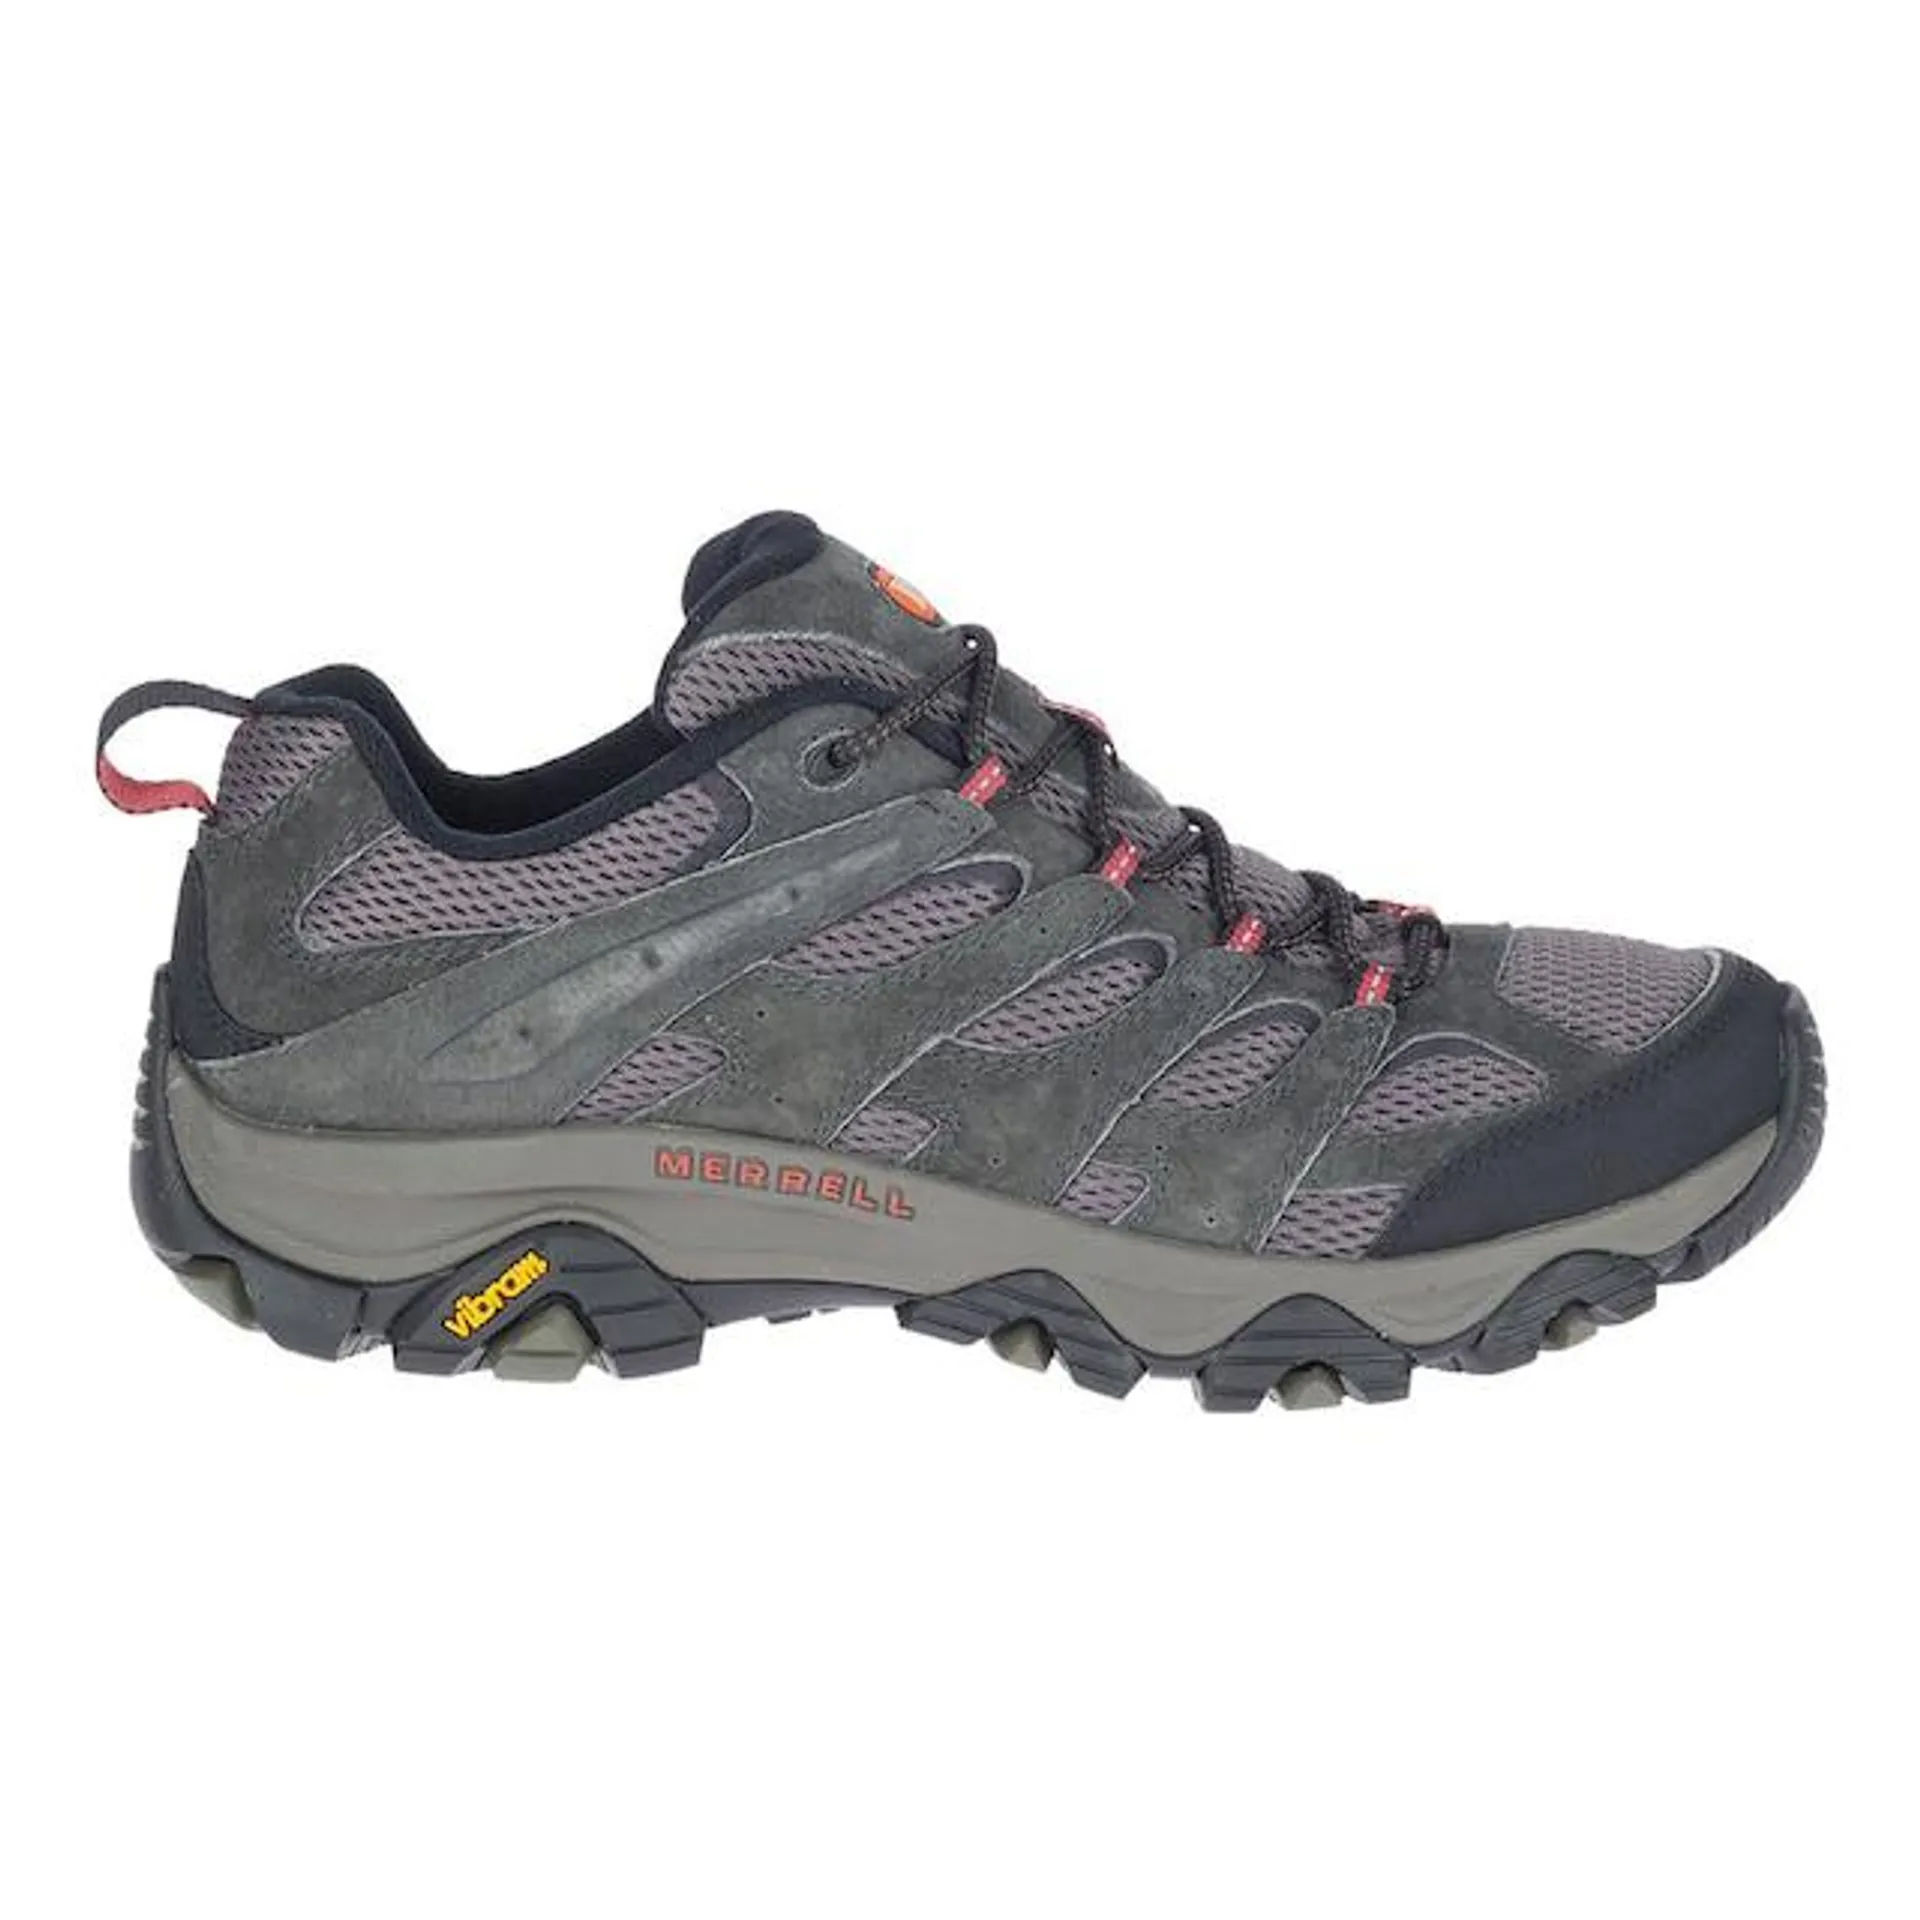 Merrell Men's Moab 3 Vent Hiking Shoes, Trail